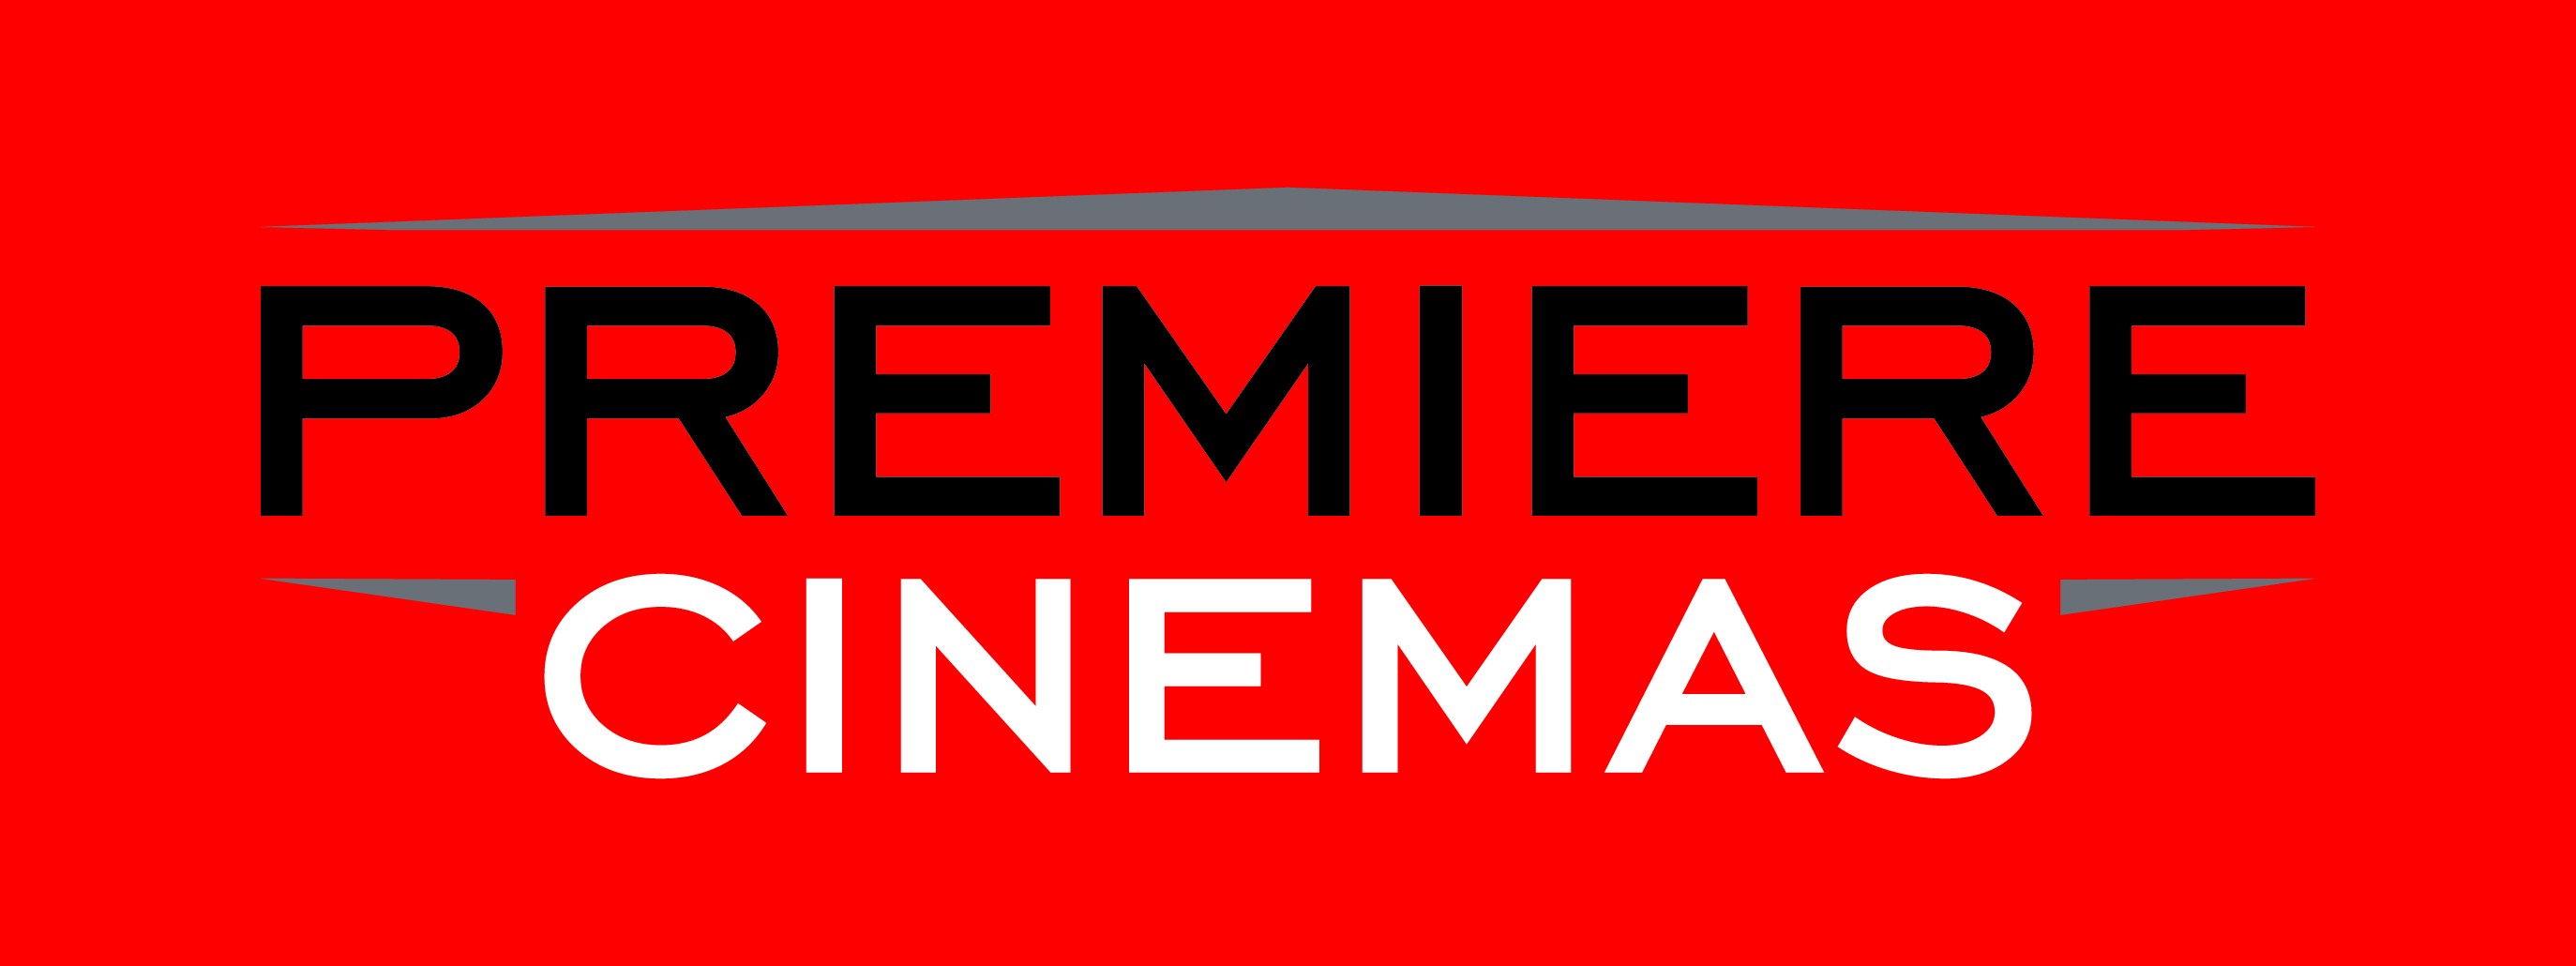 PremiereCinemas_logo_cervena